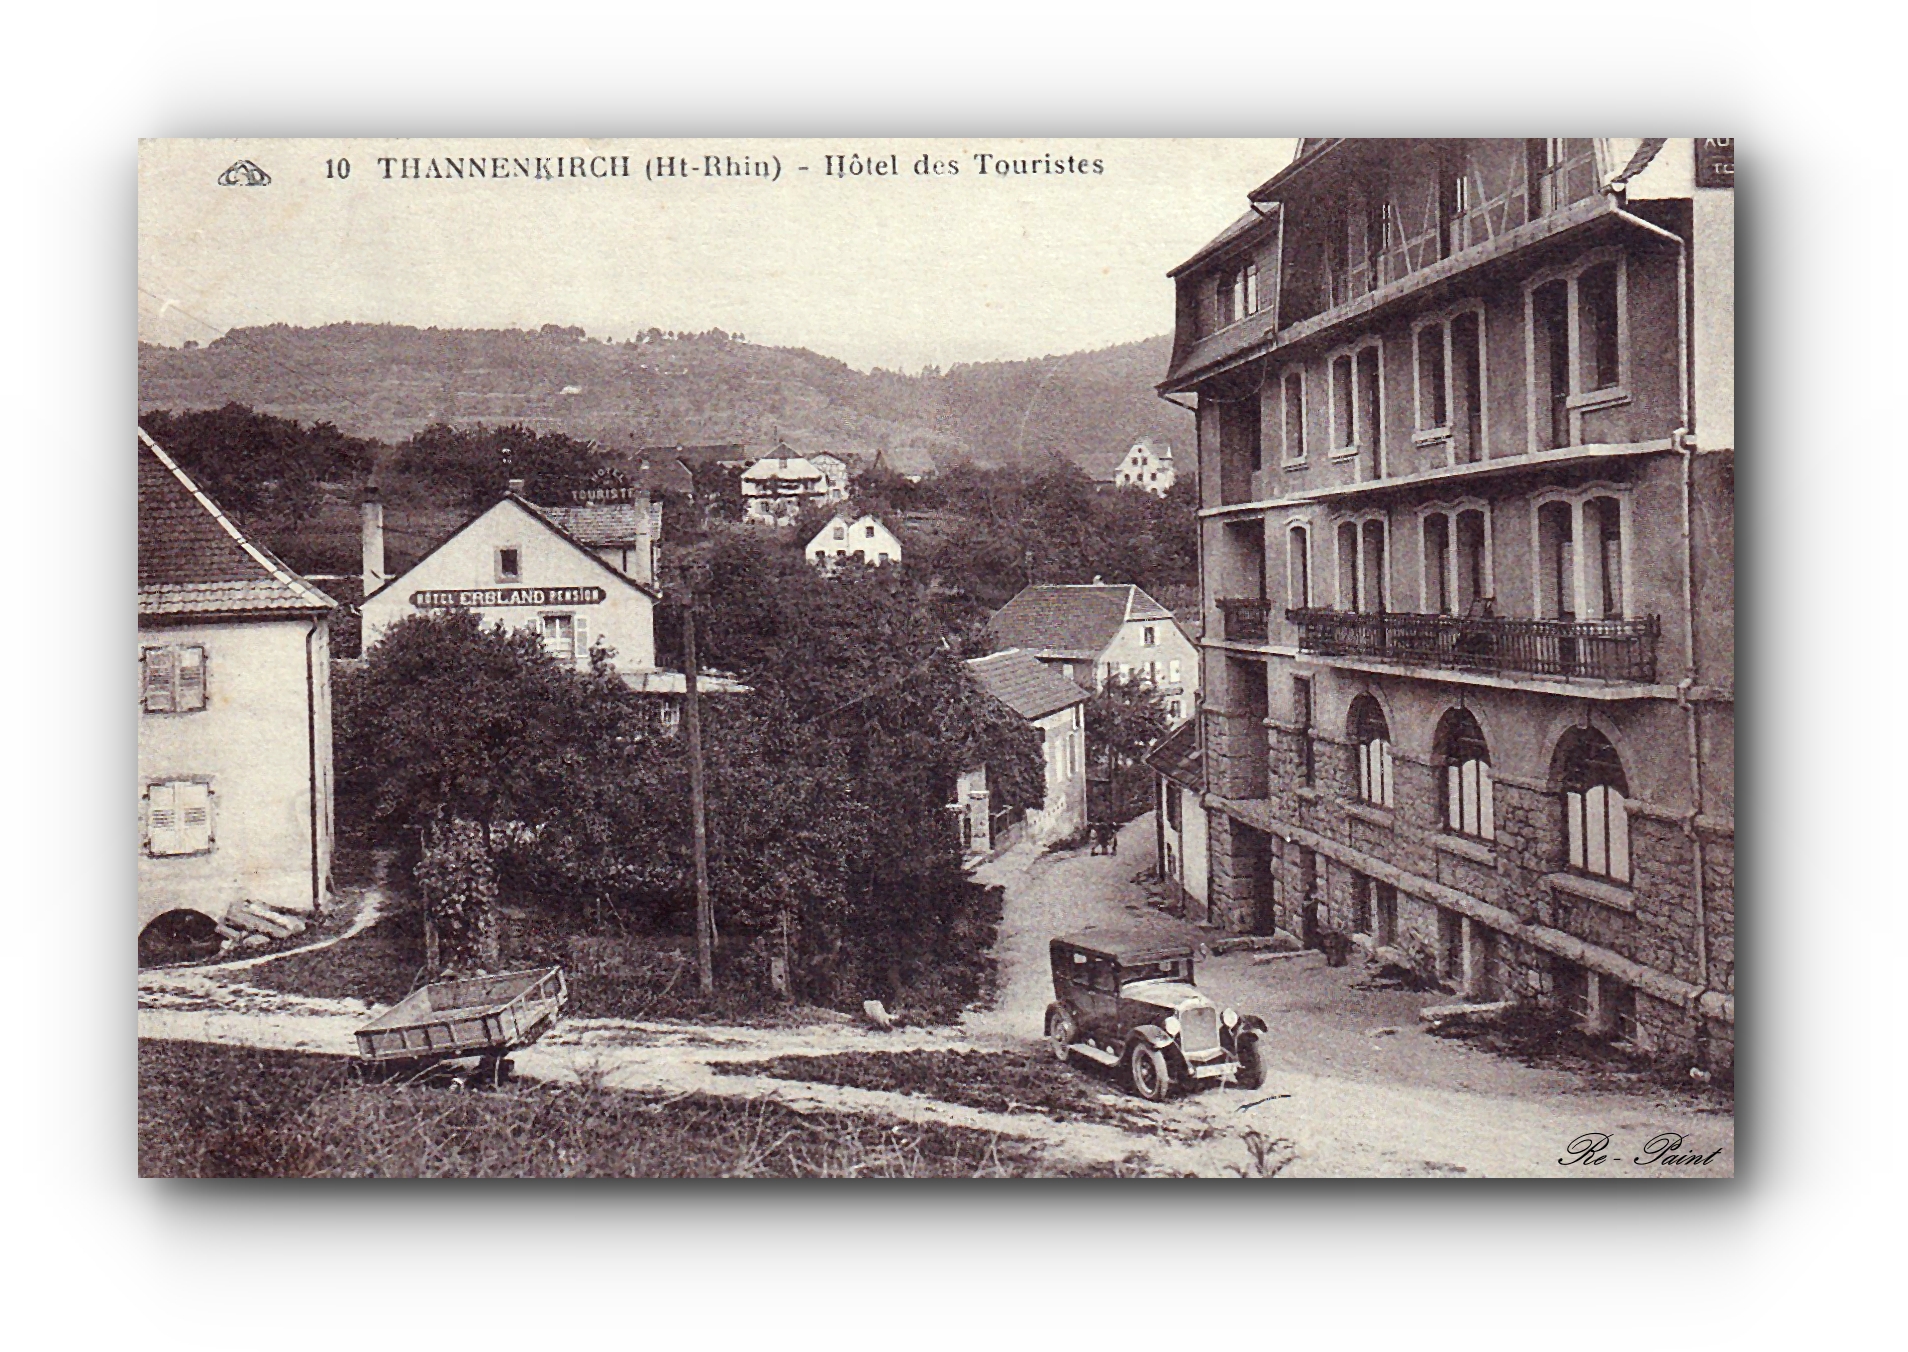 - Hôtel des Touristes - THANNENKIRCH - 27.08.1931 -